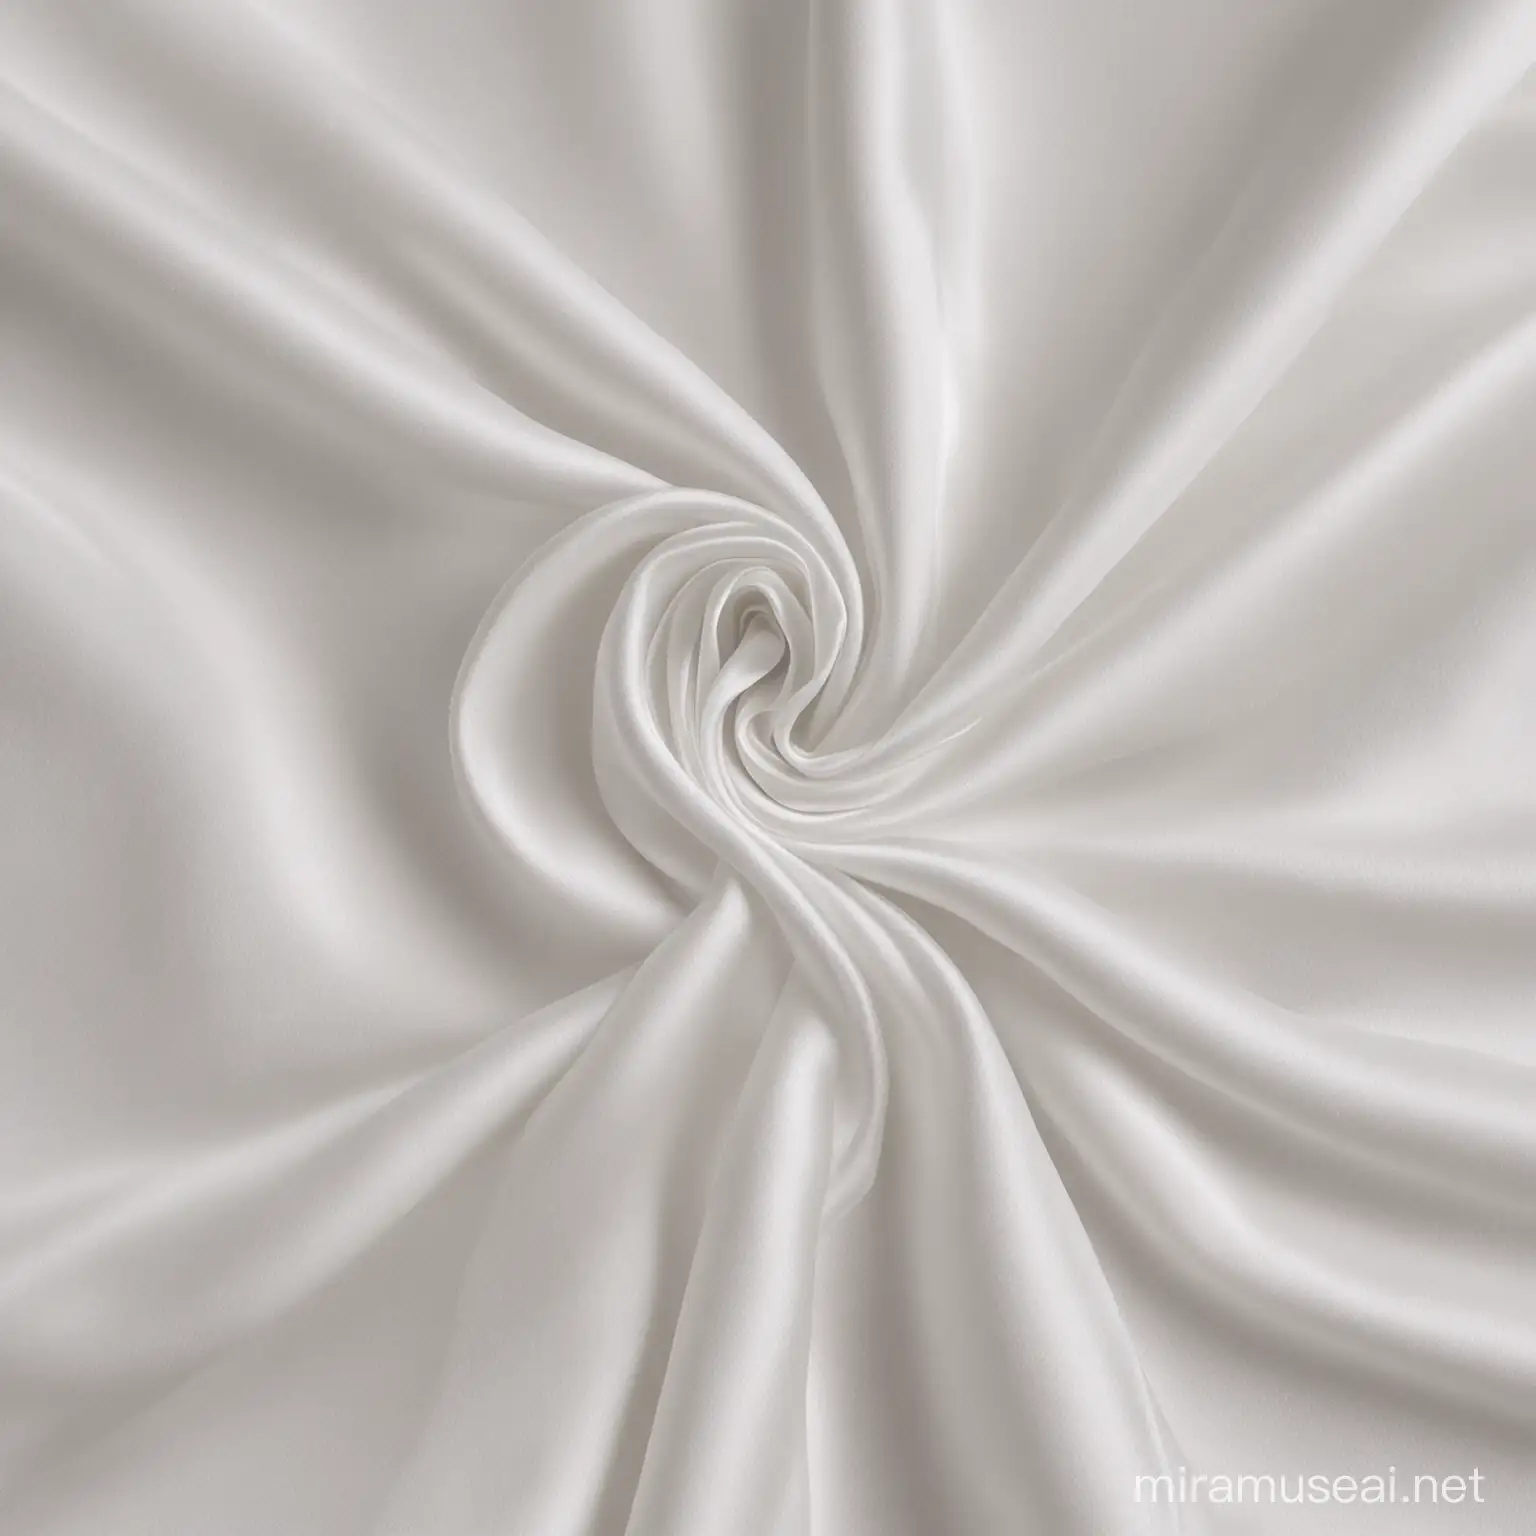 Flowing White Silk Fabric